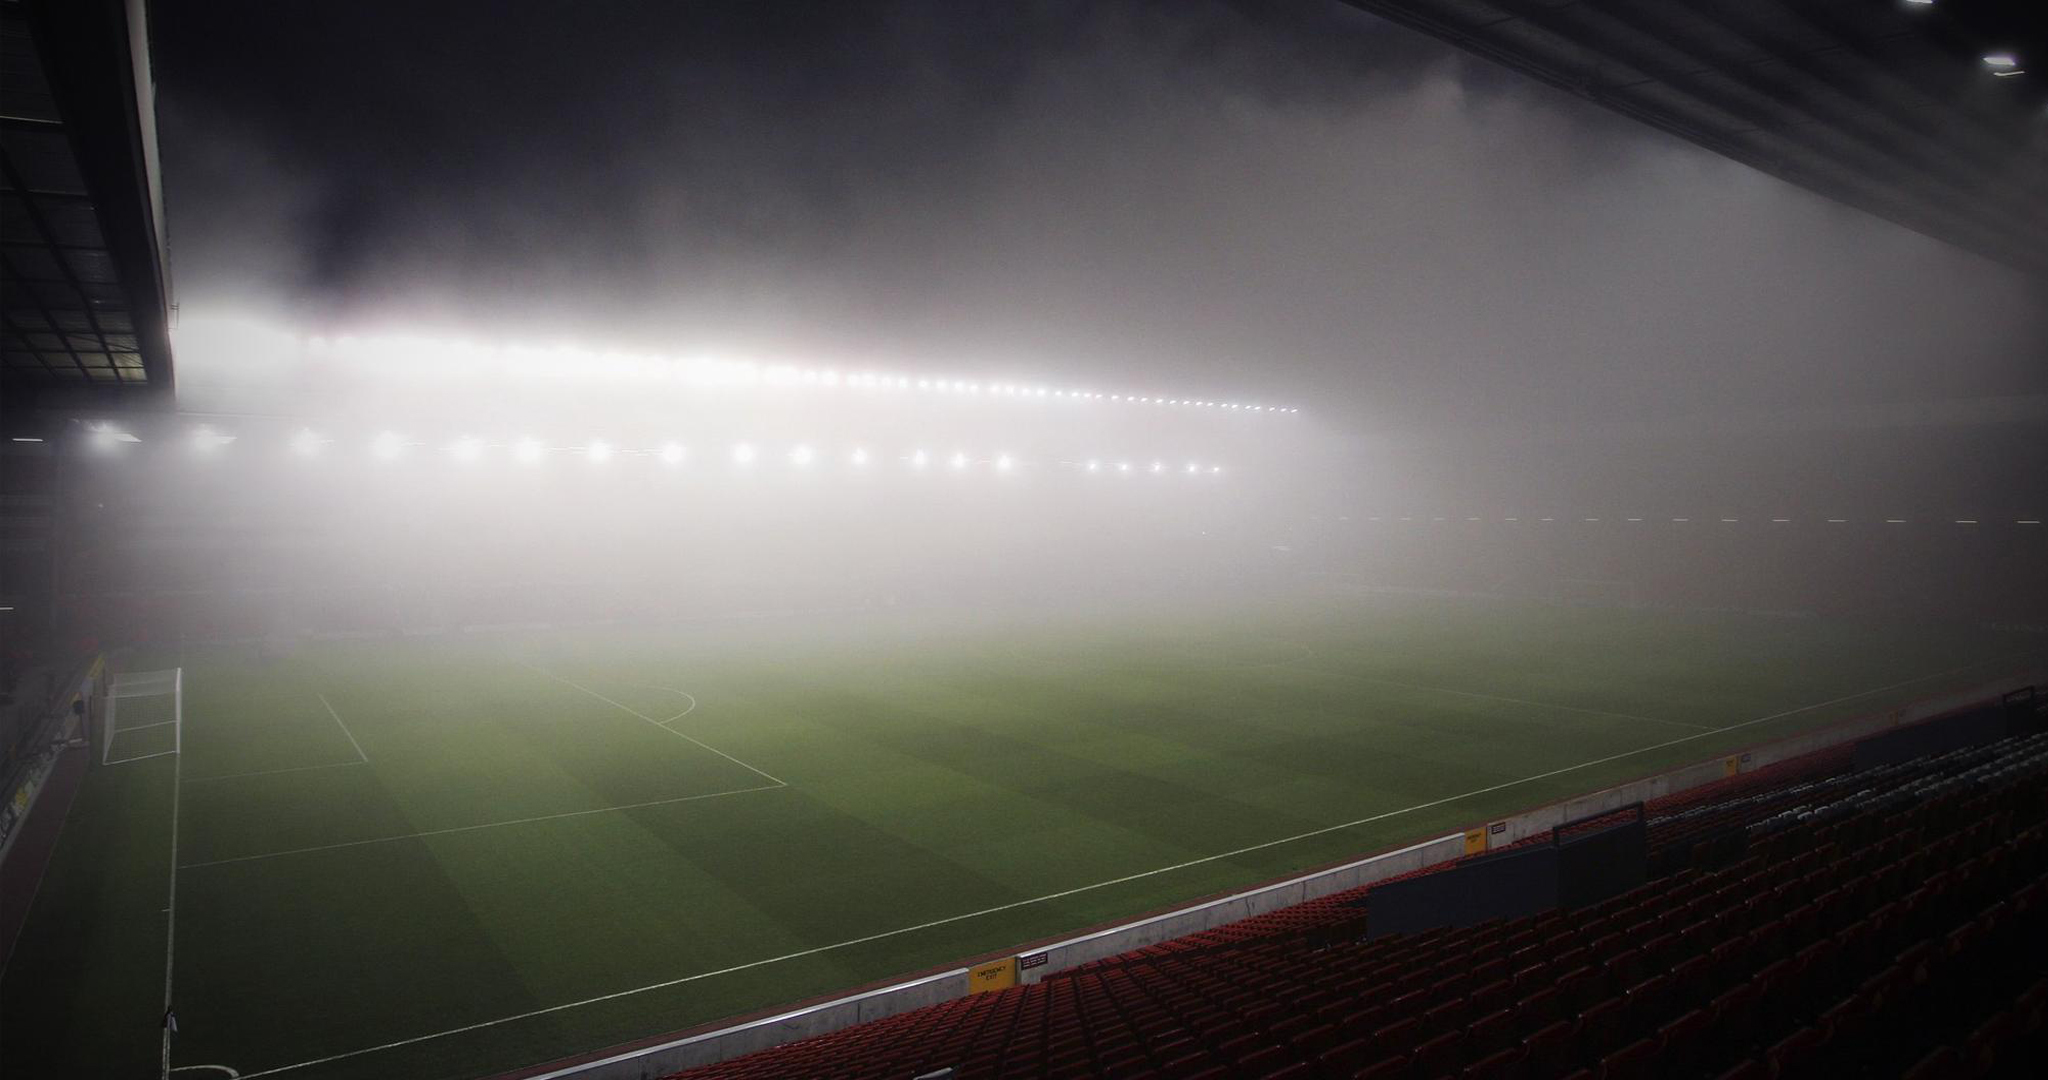 Картинка: Поле, газон, футбол, стадион, свет, туман, трибуны